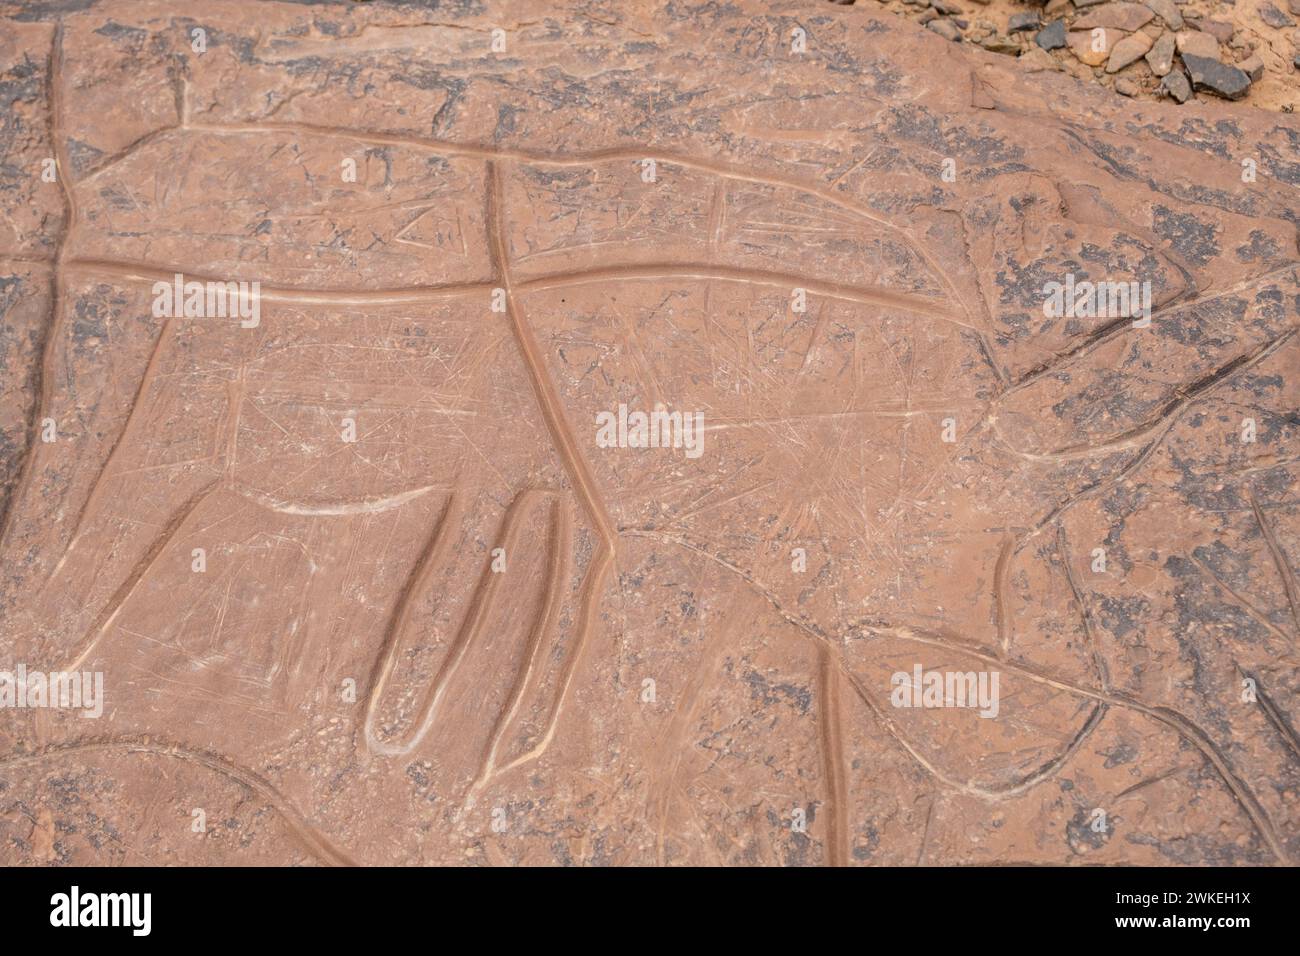 petroglifo, yacimiento rupestre de Aït Ouazik, finales del Neolítico, Marruecos, Africa. Stock Photo